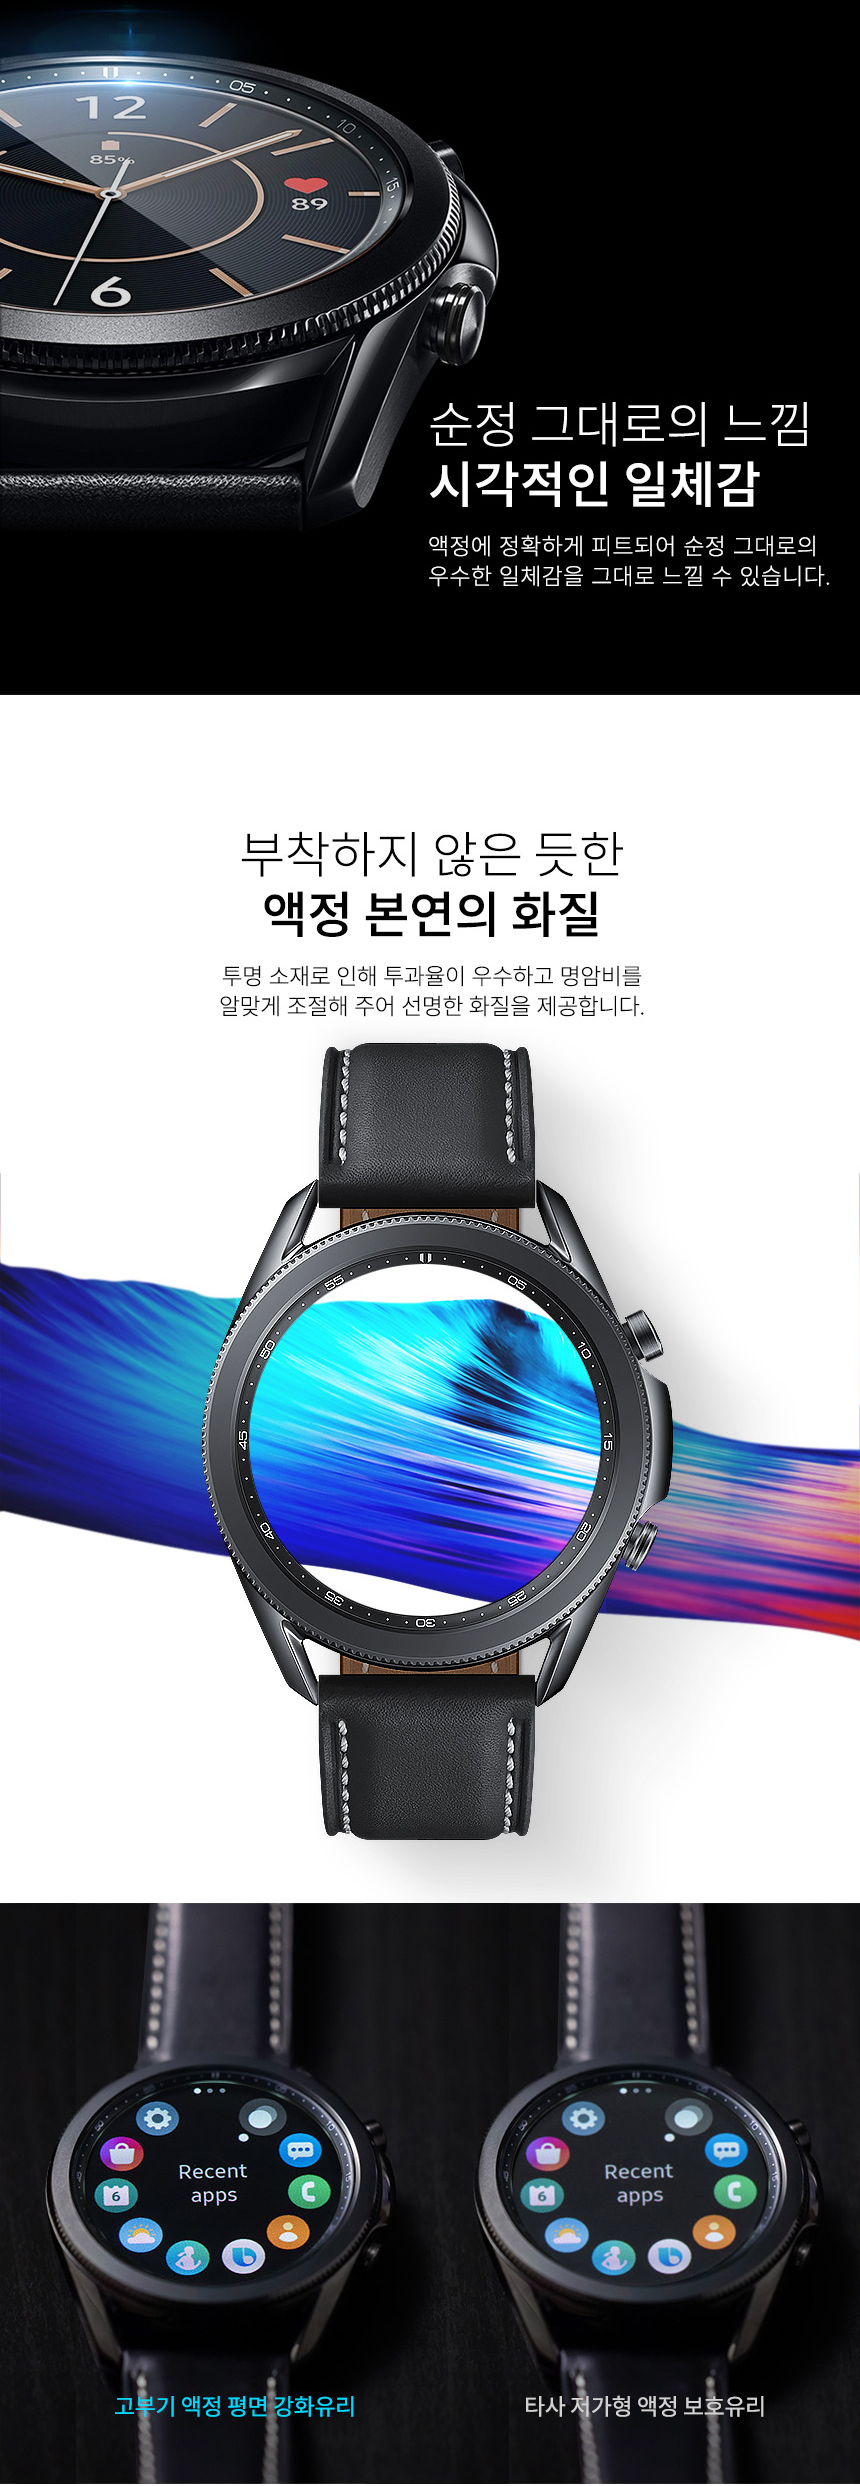 Galaxy-watch3_Glass_Page_Ver11_Smart_03.jpg